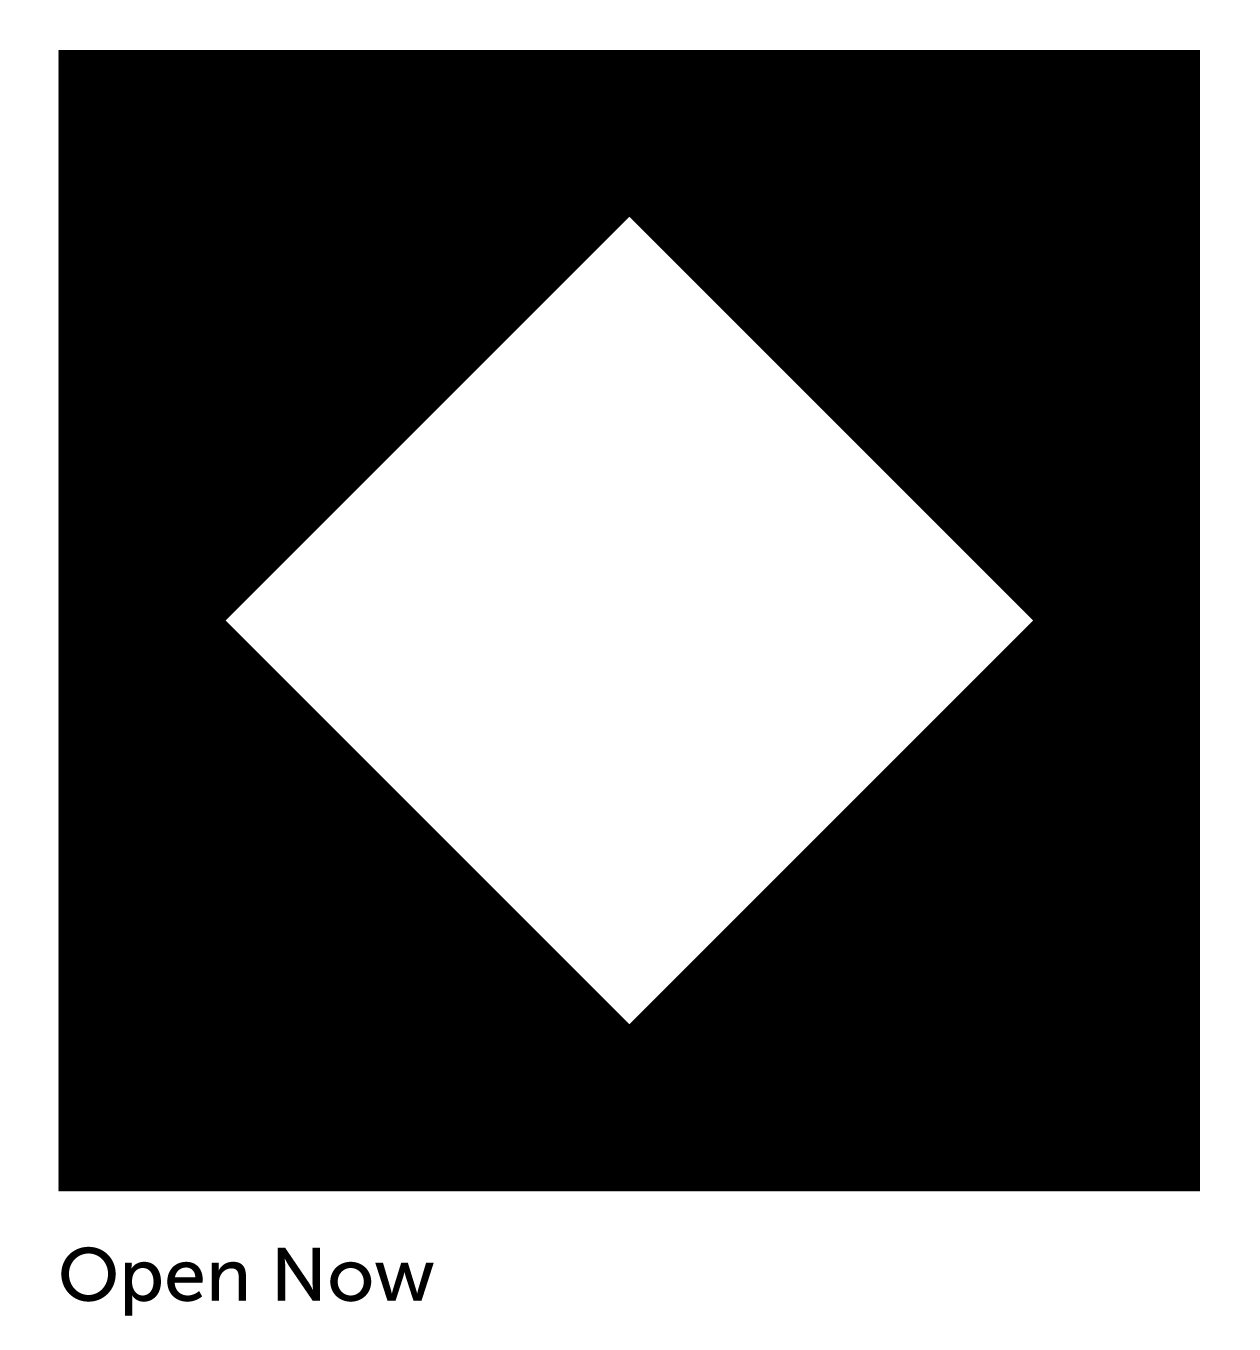 openNow_logo.jpg